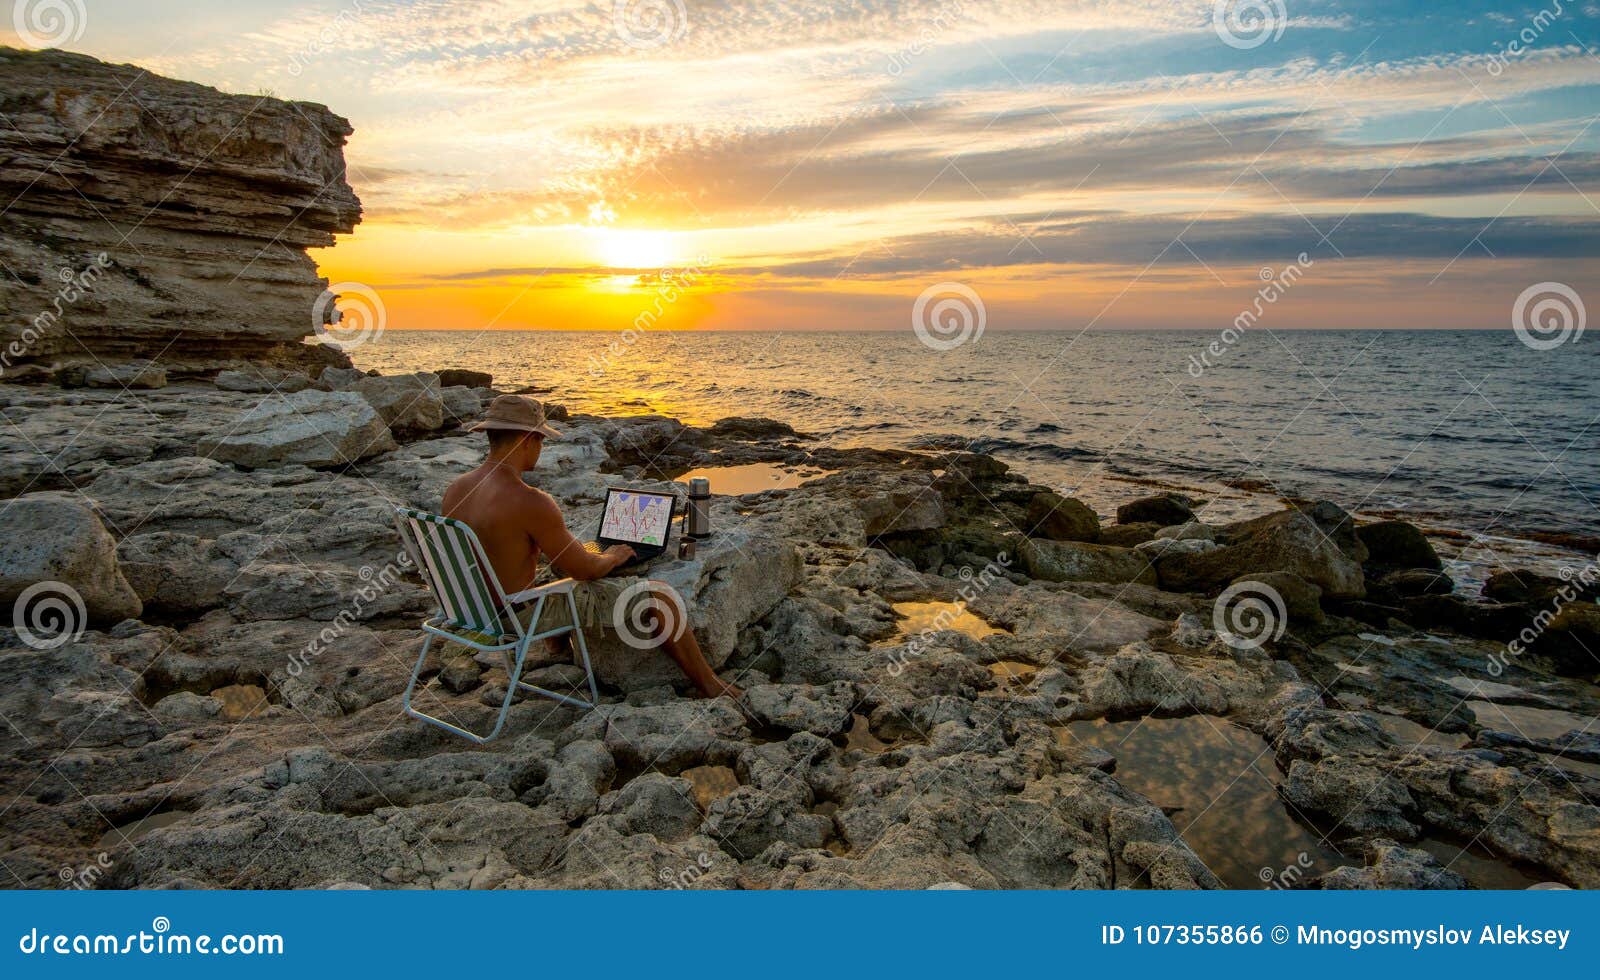 freelancer work on laptop on coast sea on deauty sunset background